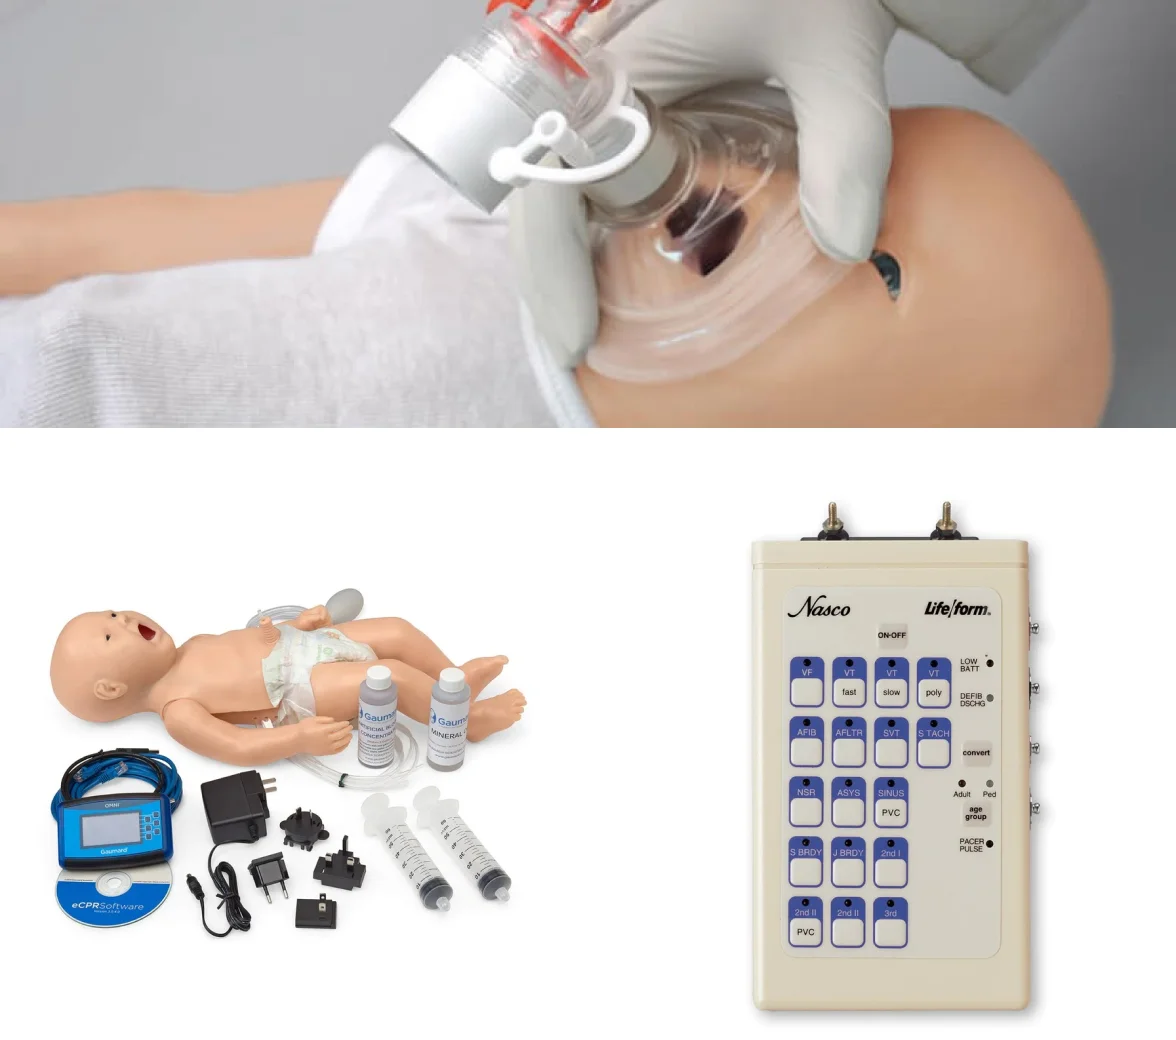 Nortal bought Nasco Healthcare Simulation Equipment